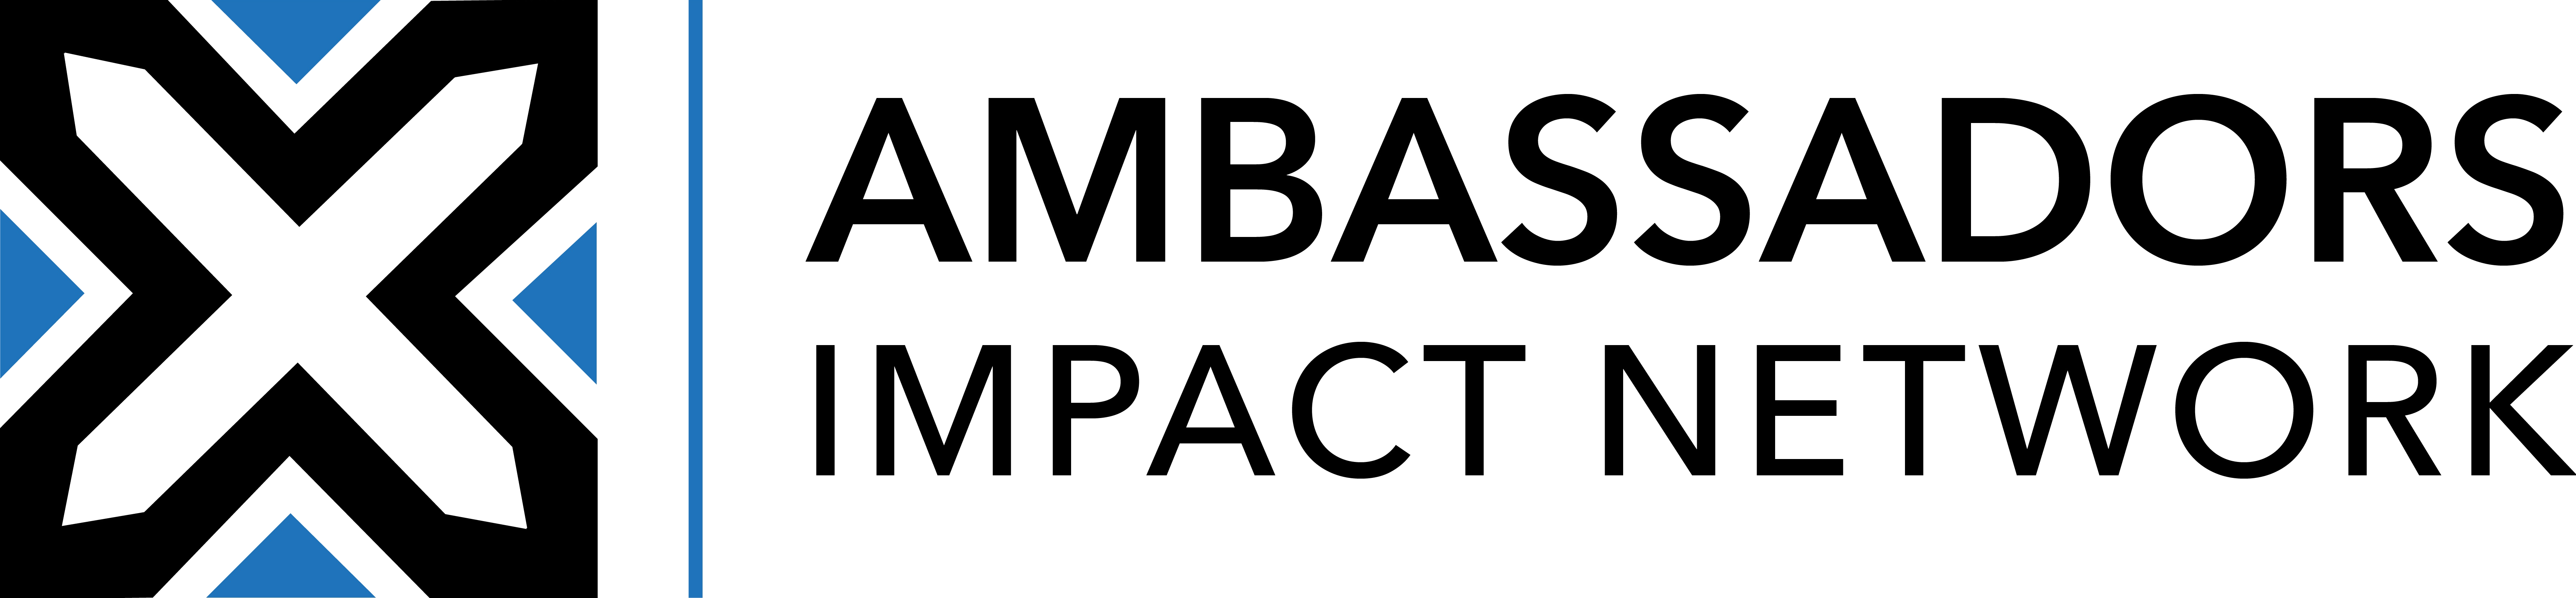 Ambassadors_Impact_Network_Logo_Transparent